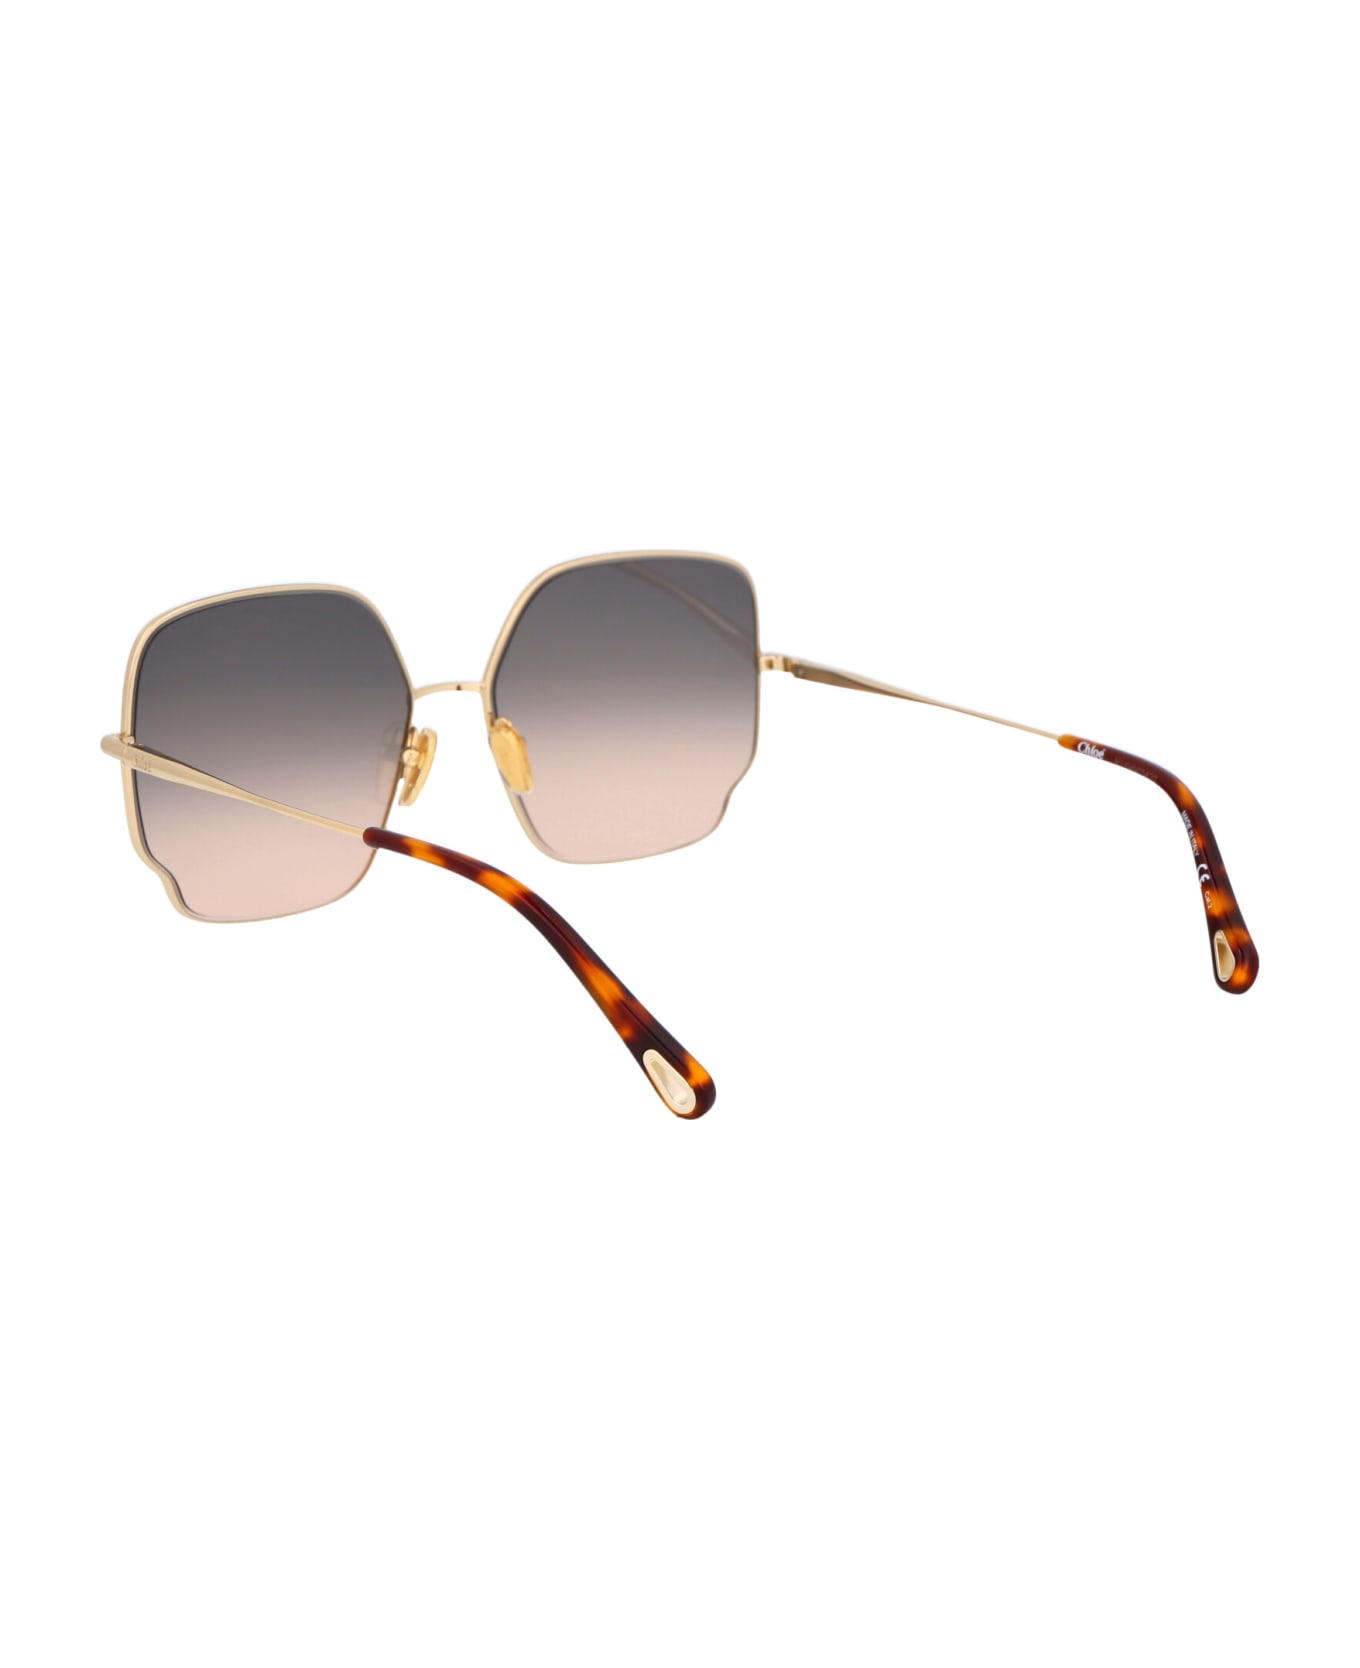 Chloé Eyewear Ch0092s Sunglasses - 001 GOLD GOLD BROWN